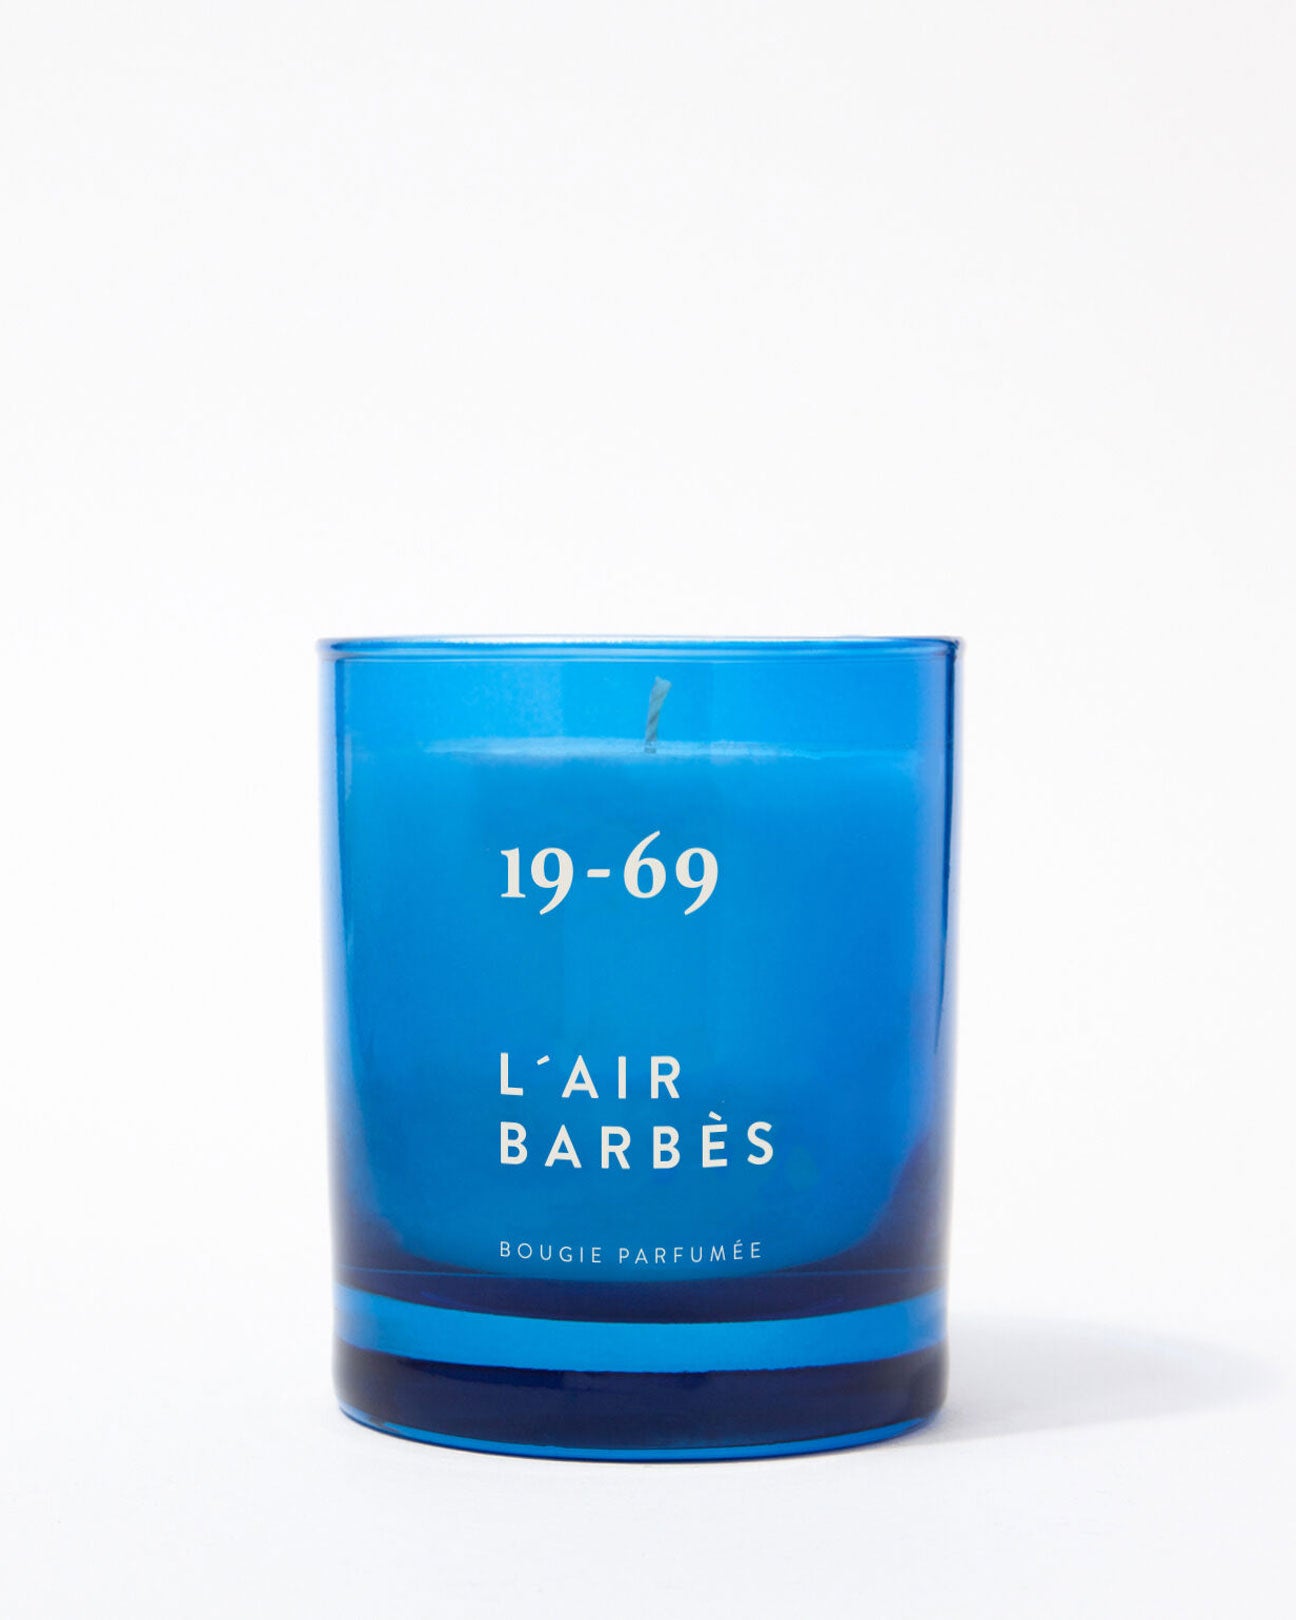 19-69 Candle in L'Air Barbès